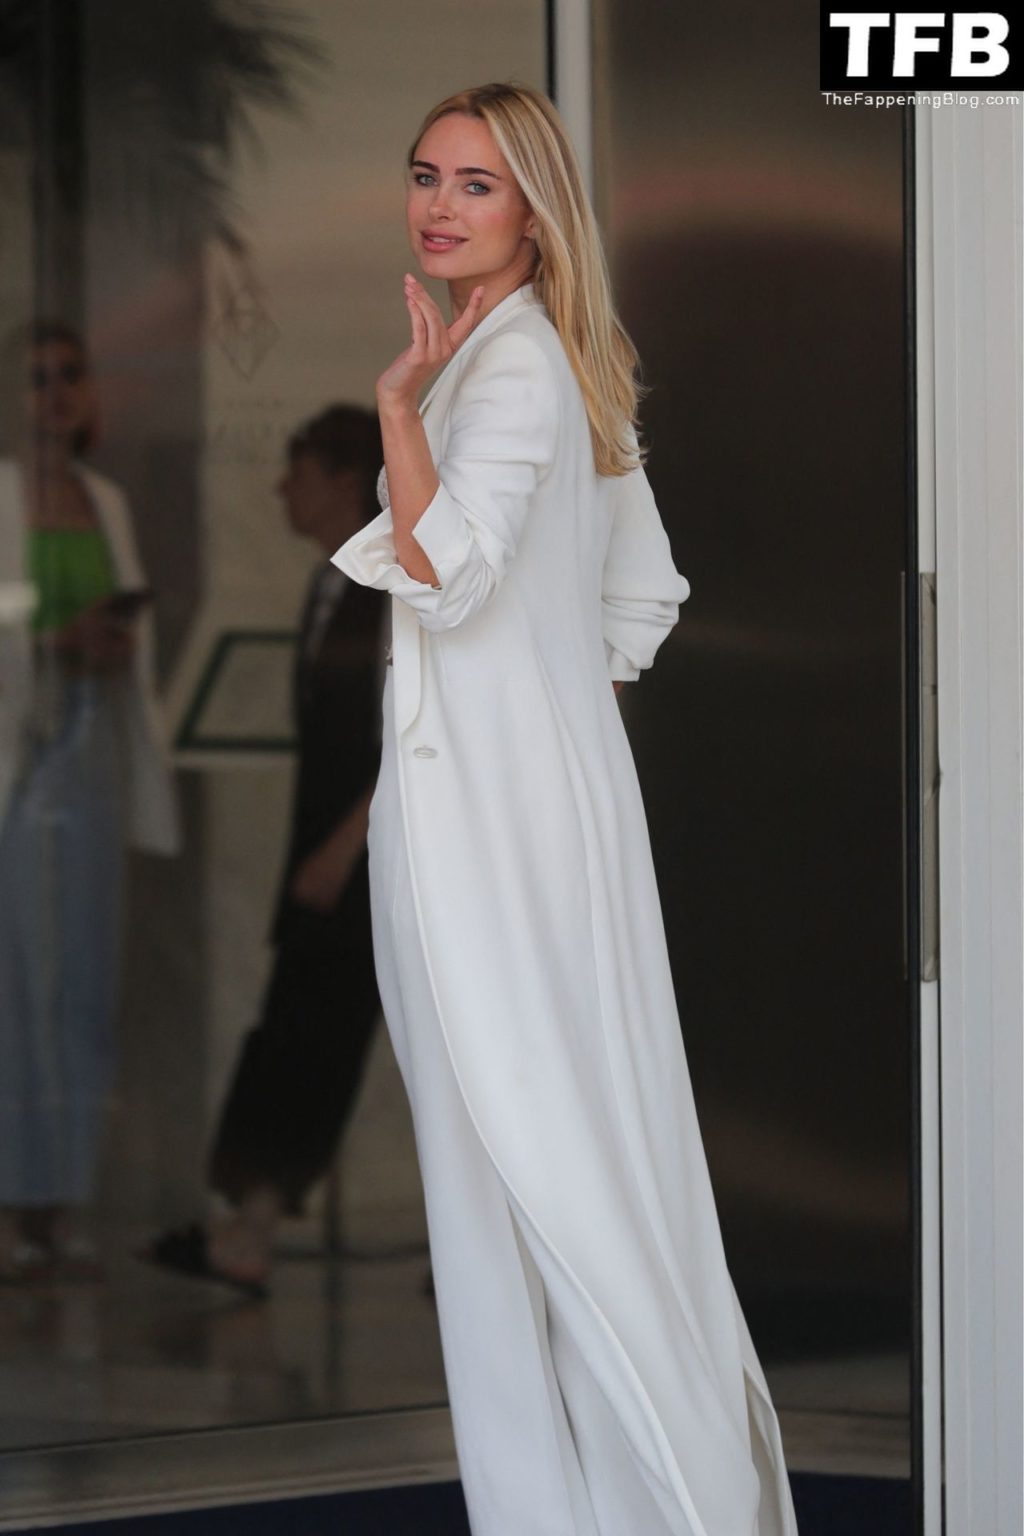 Kimberley Garner is Seen Leaving “Martinez” Hotel in Cannes (20 Photos)